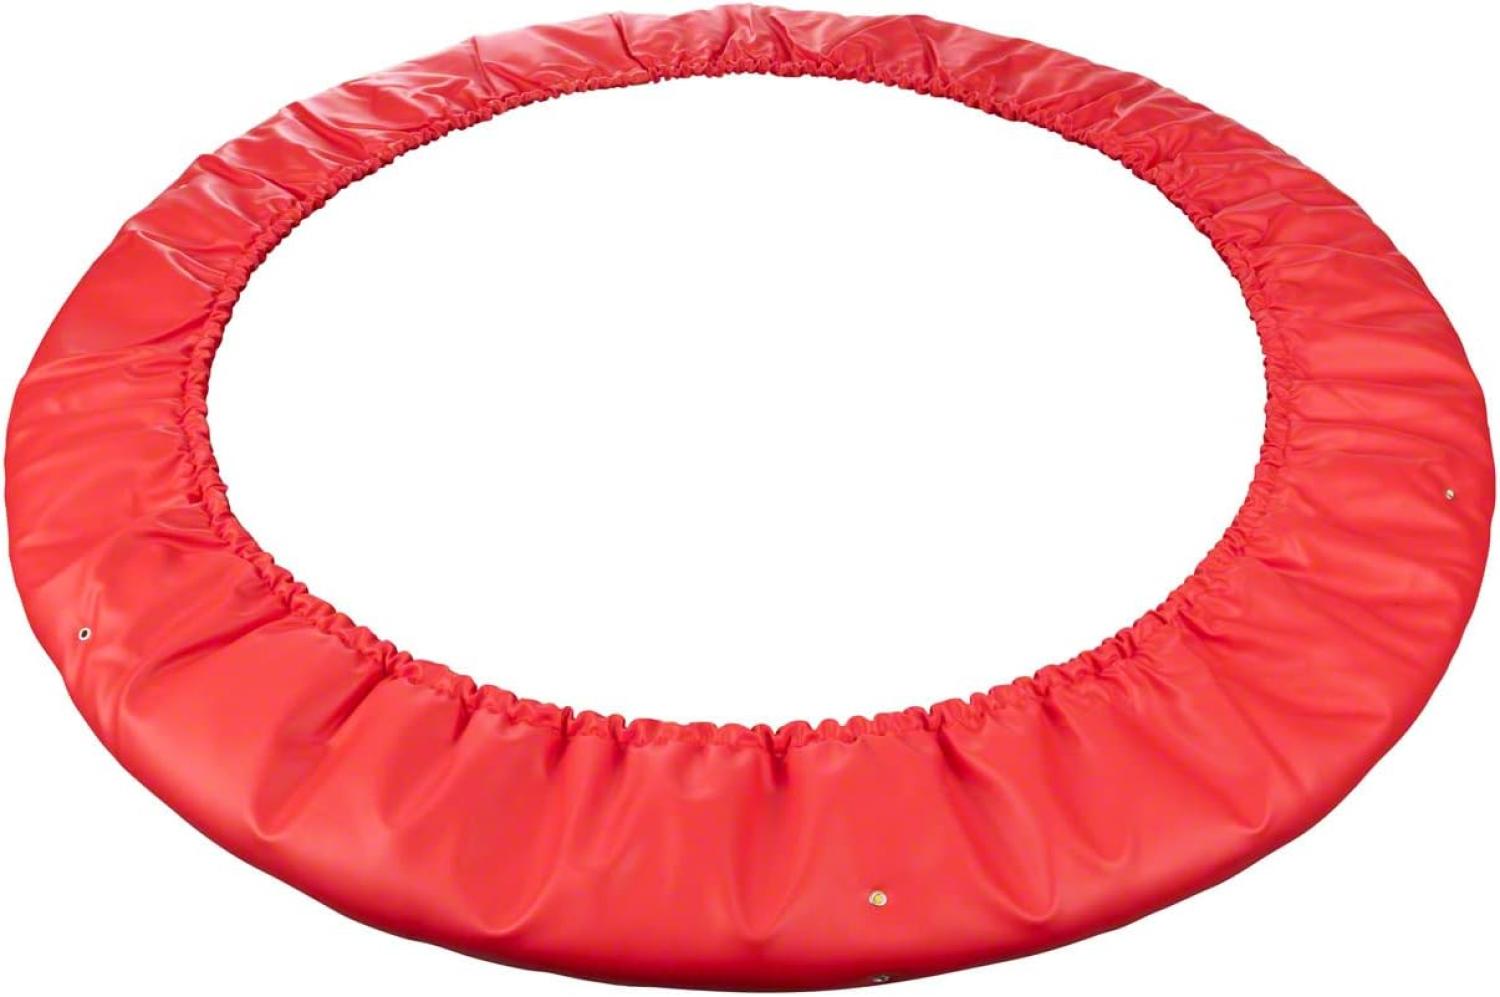 Trimilin Randbezug, Ersatzbezug für Trampolin, Bezug in vielen Farben, 102 cm, Rot Bild 1